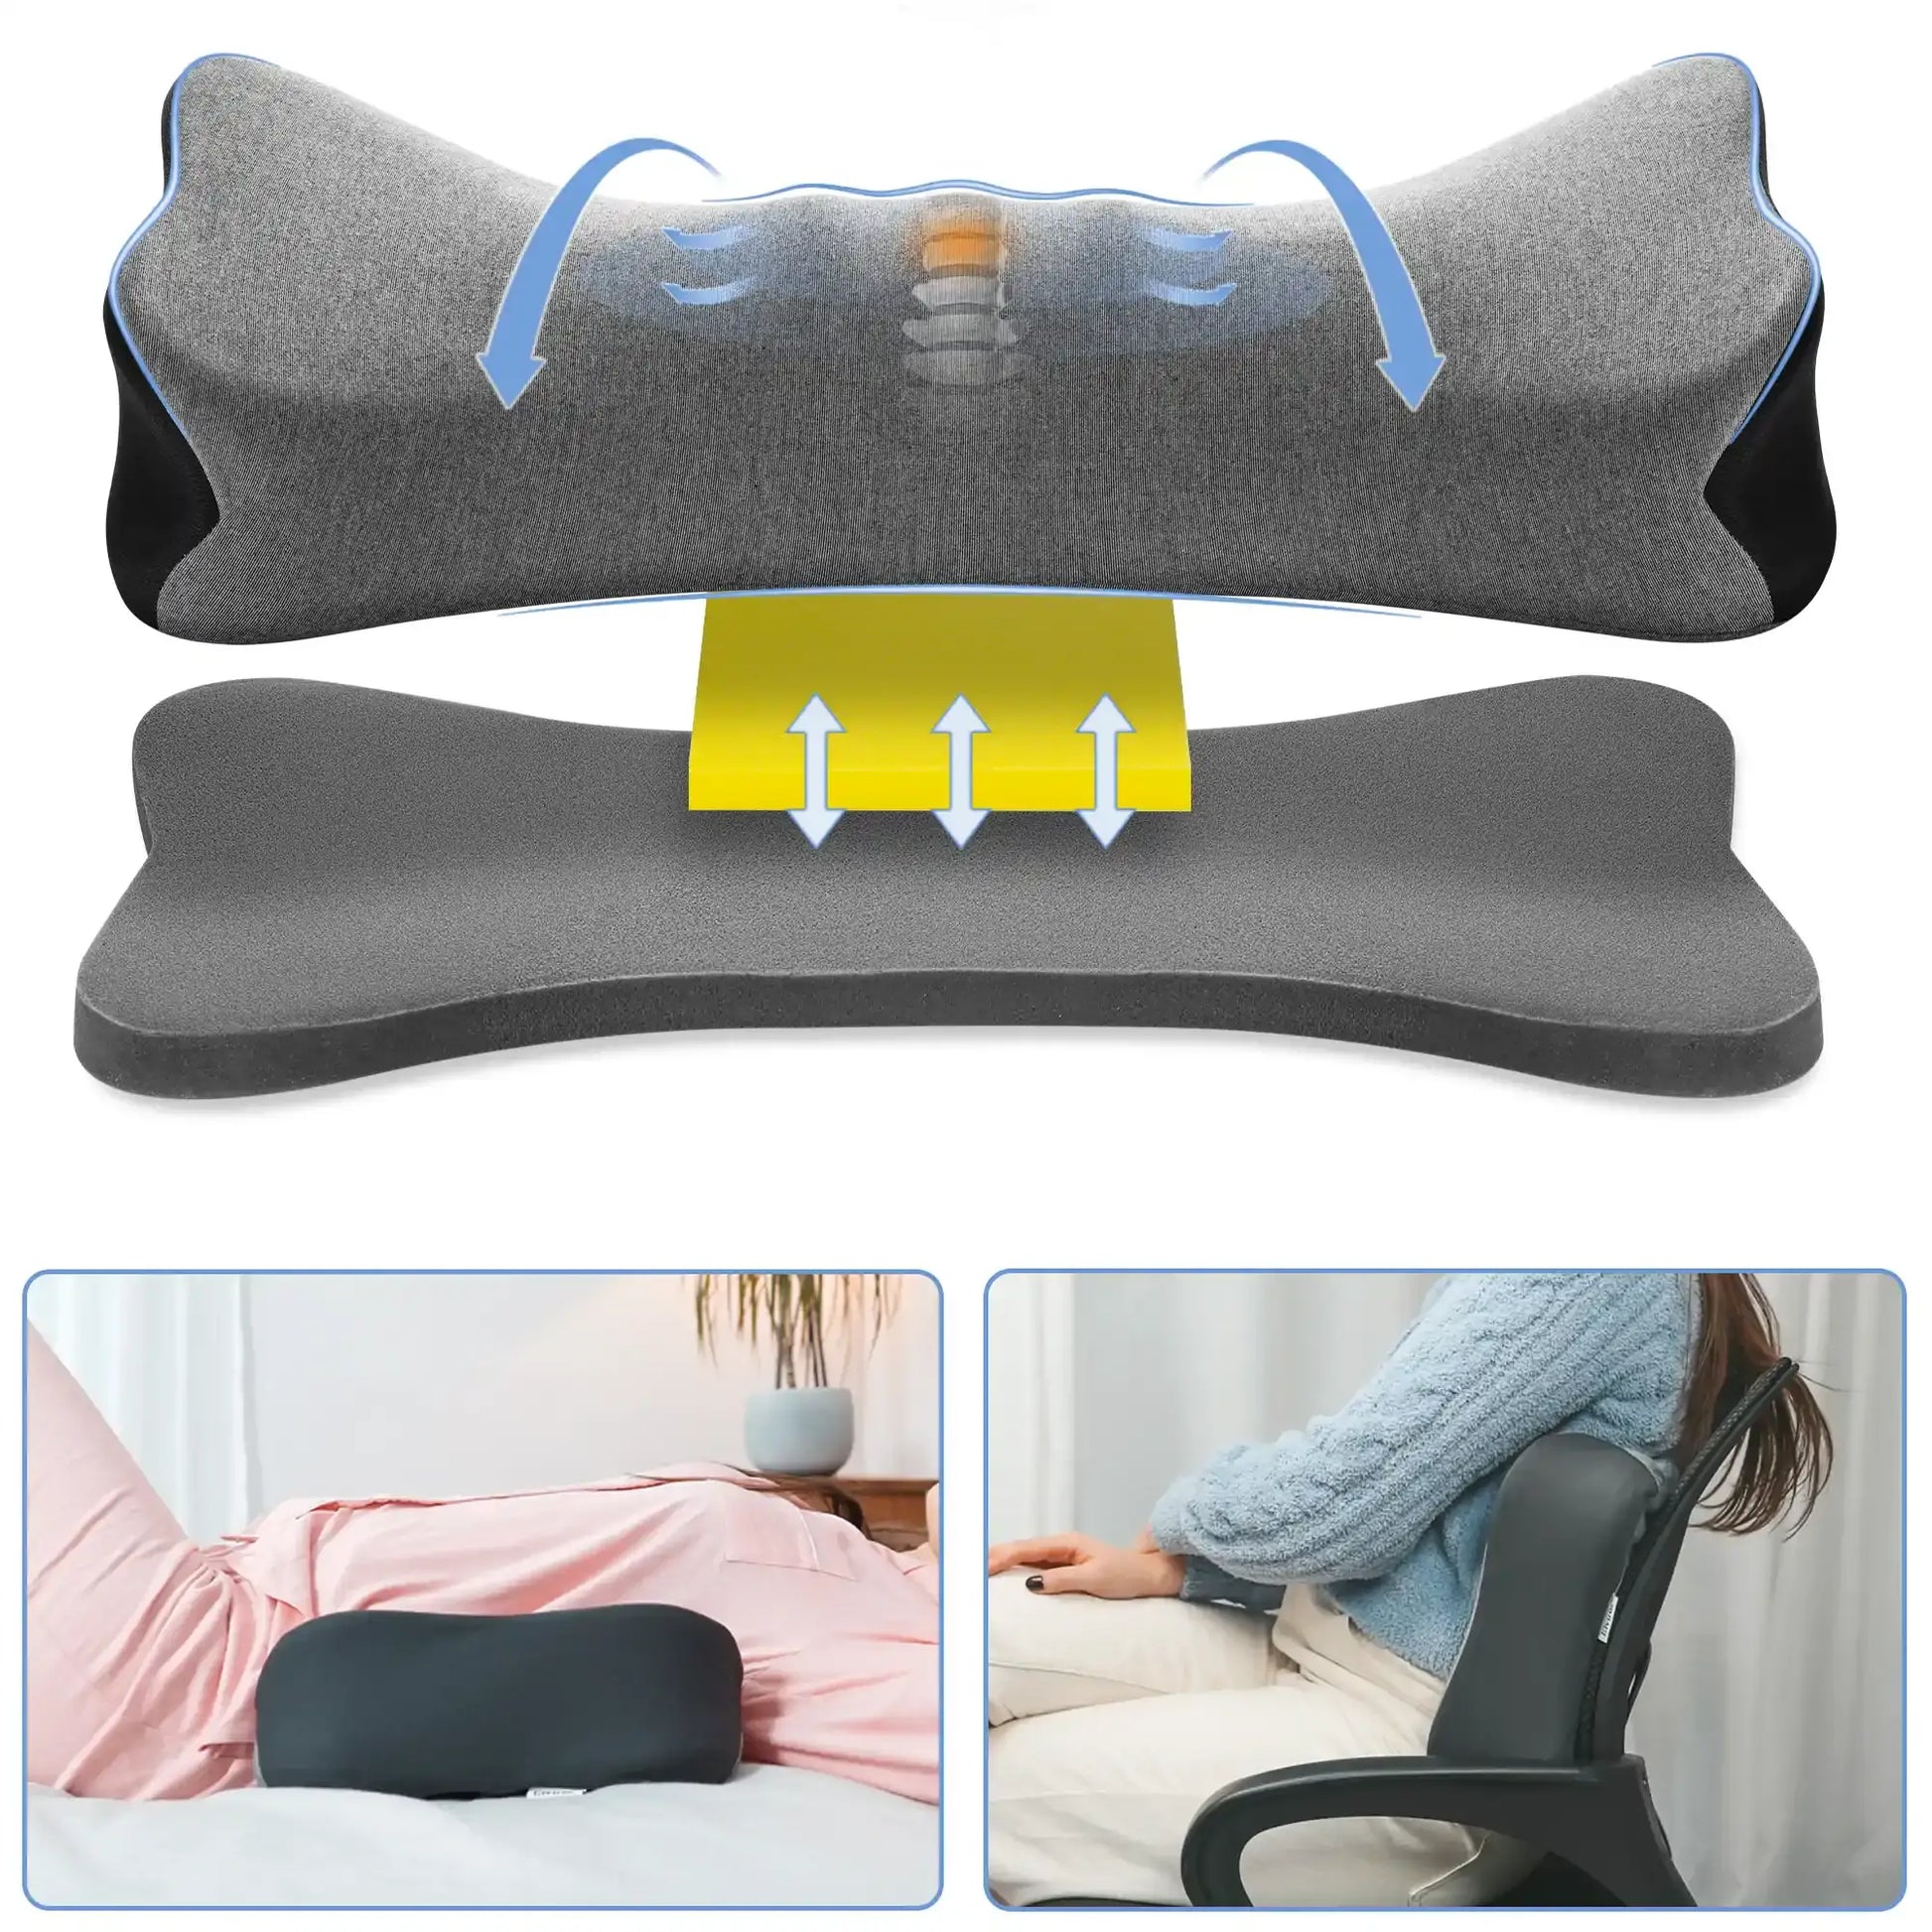 Lower Back Pain Relief Lumbar Support Pillow Premium Memory